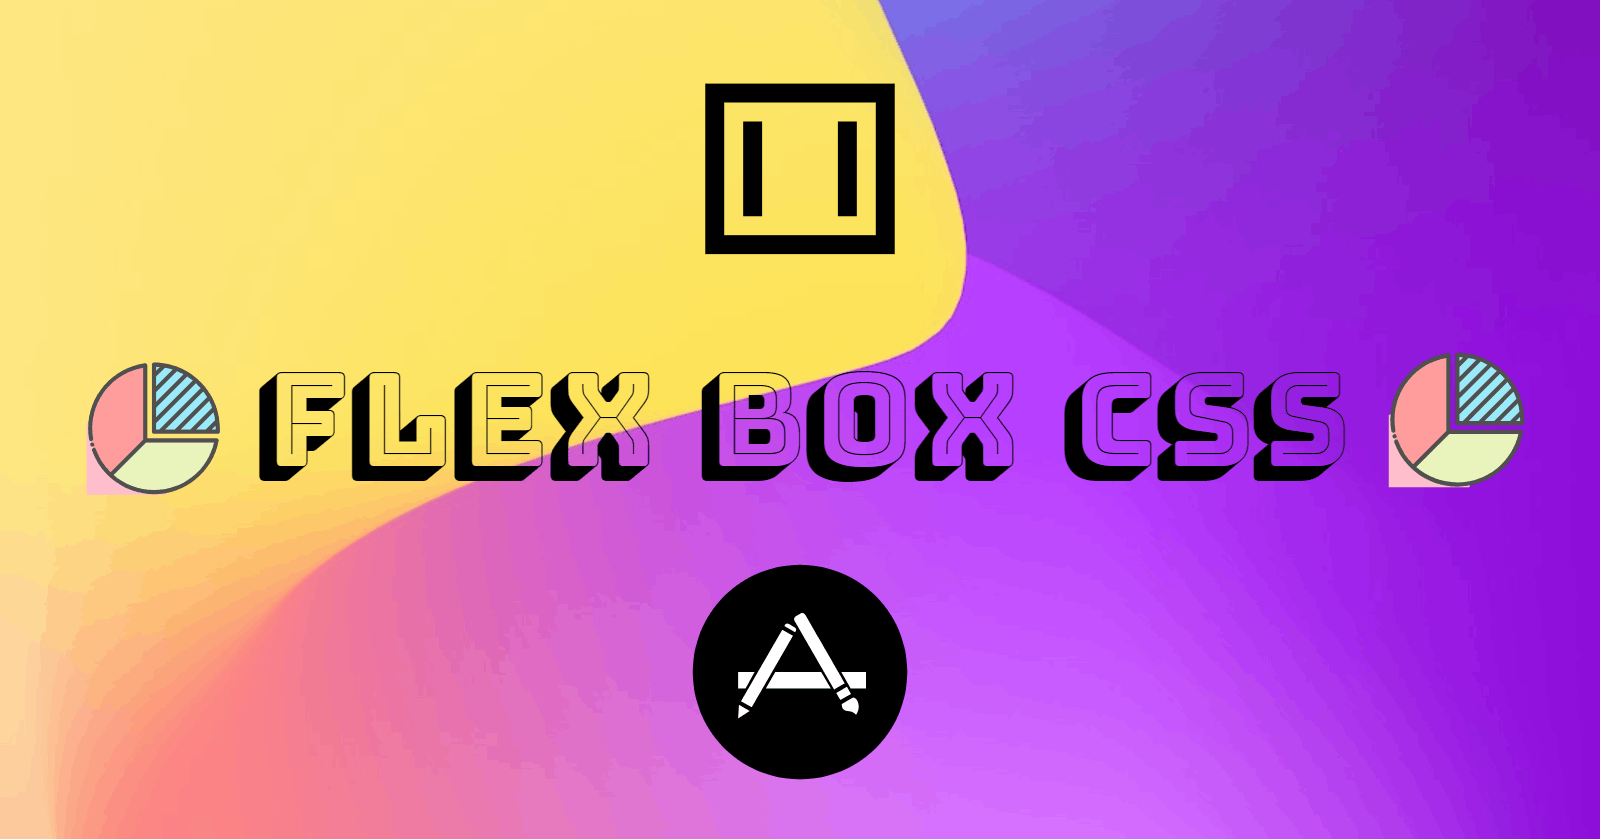 Flex box css